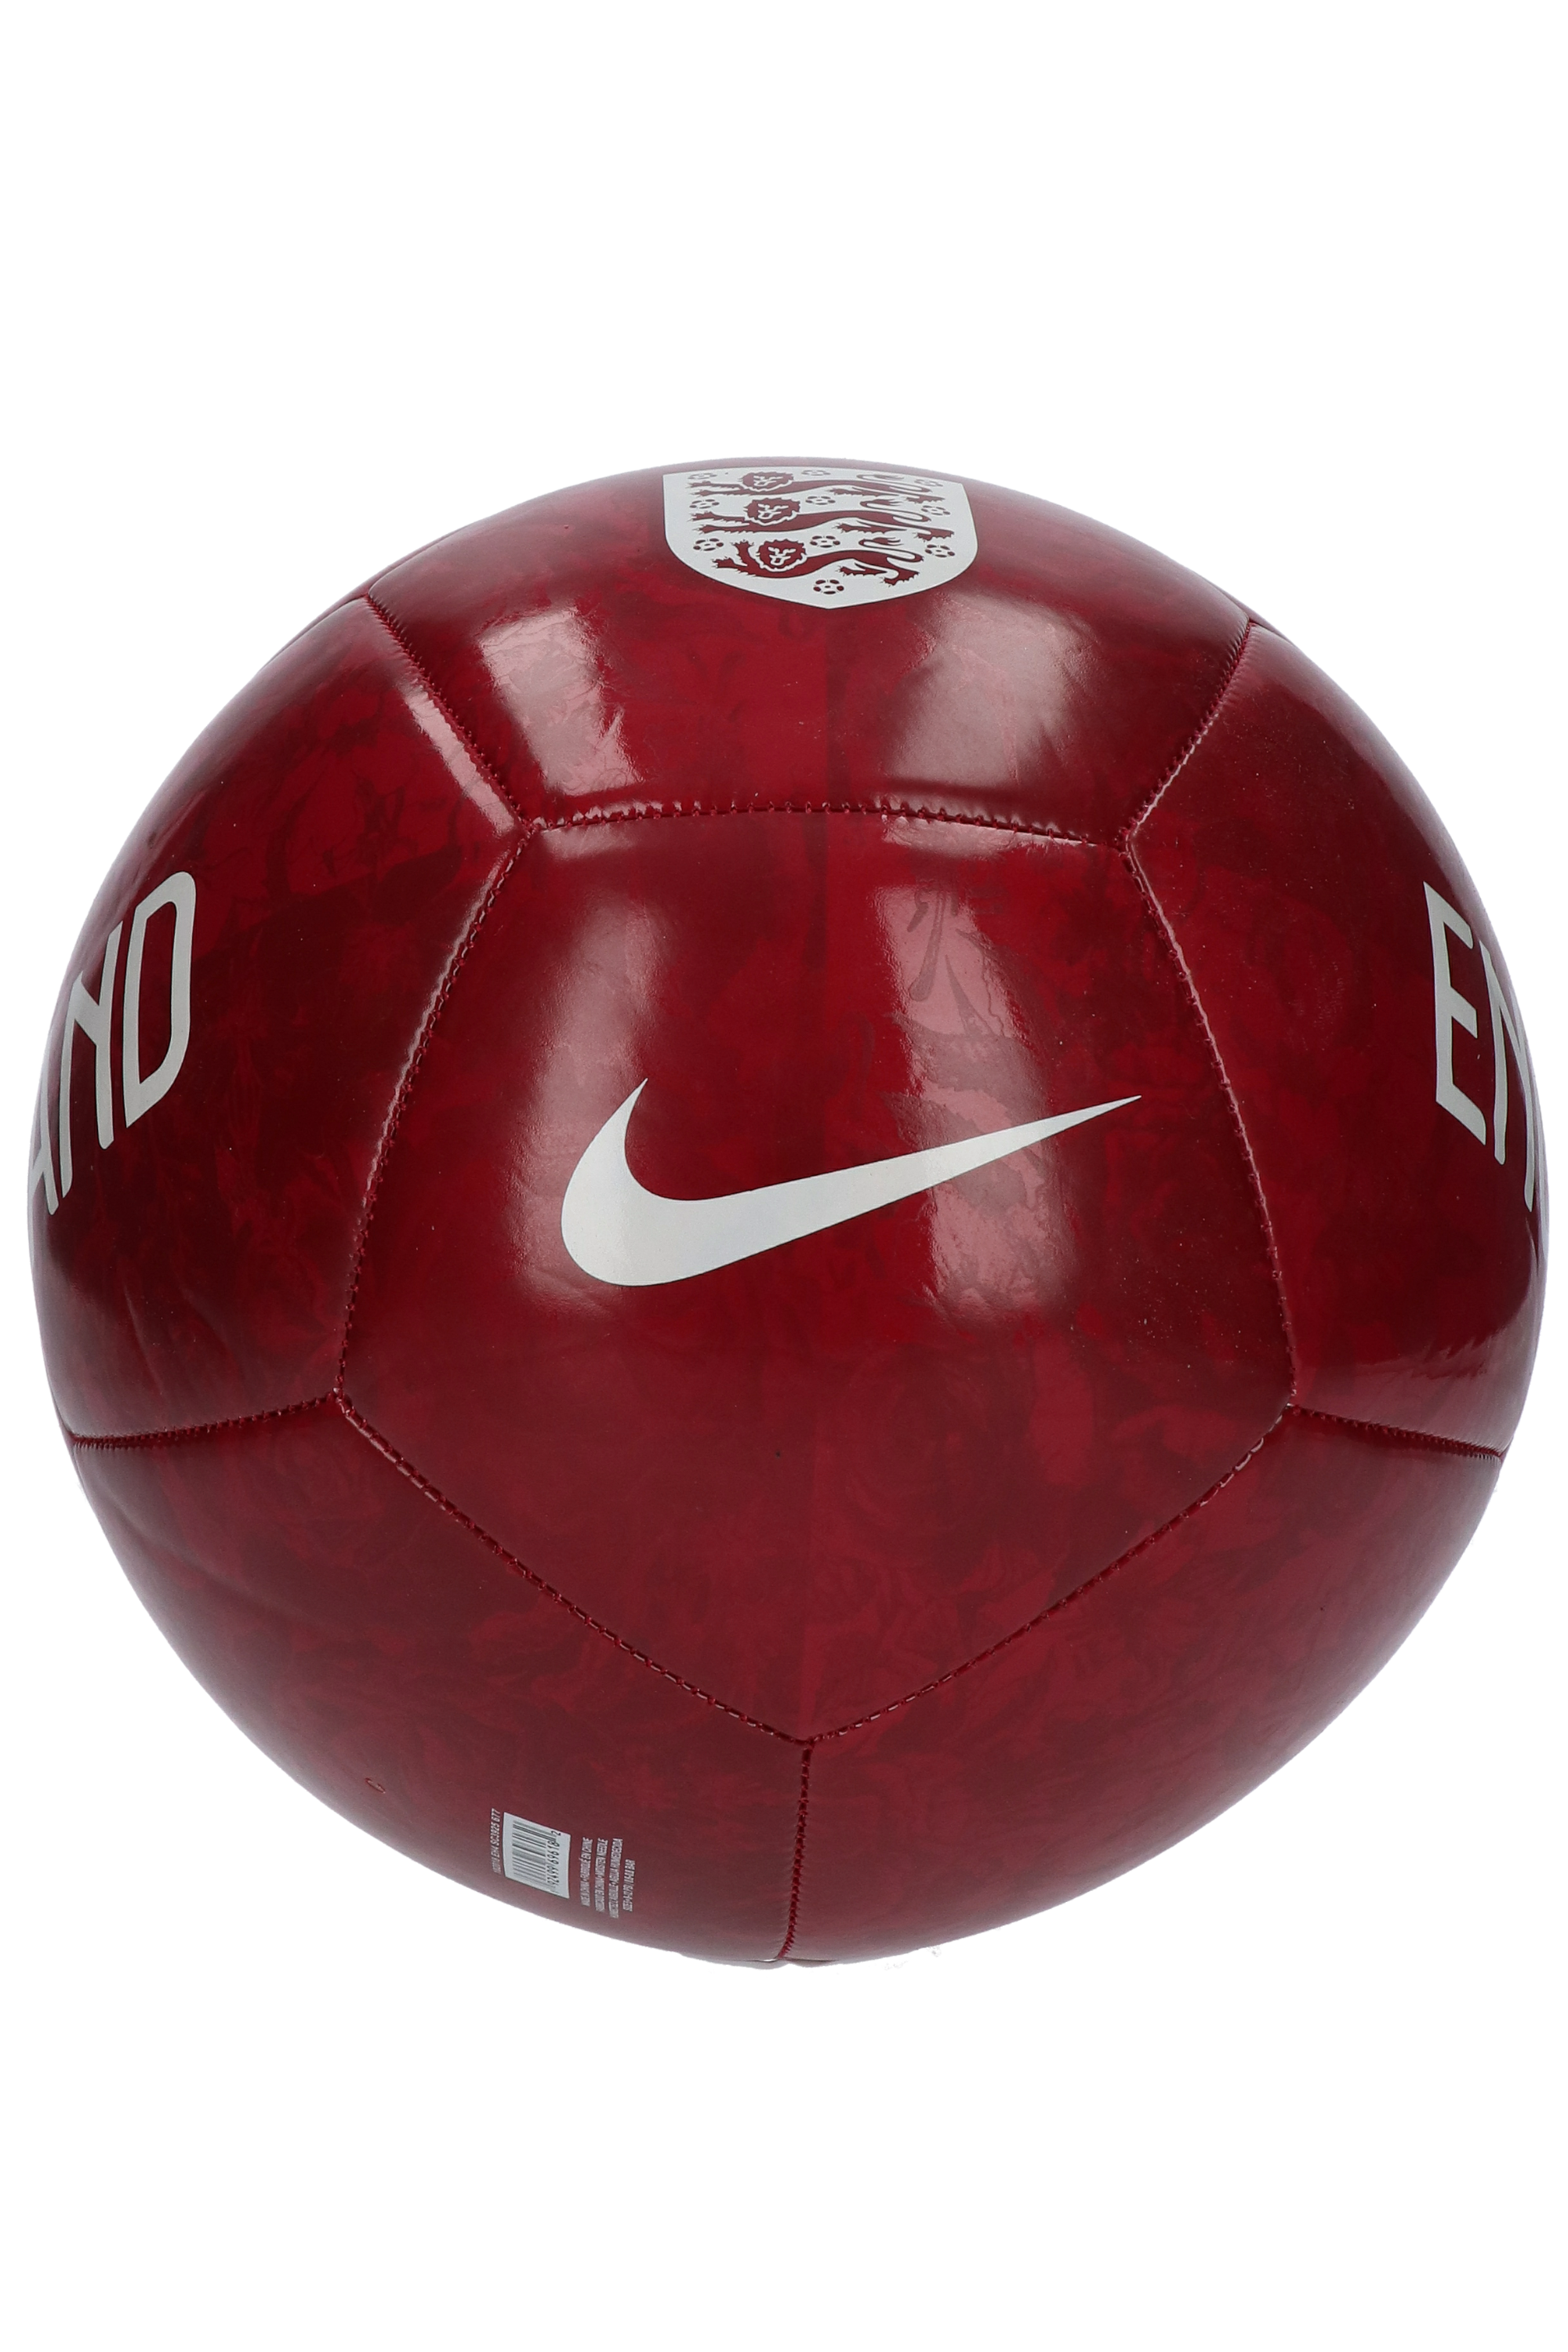 pasado Conciliar elegante Ball Nike ENT Pitch size 5 | R-GOL.com - Football boots & equipment